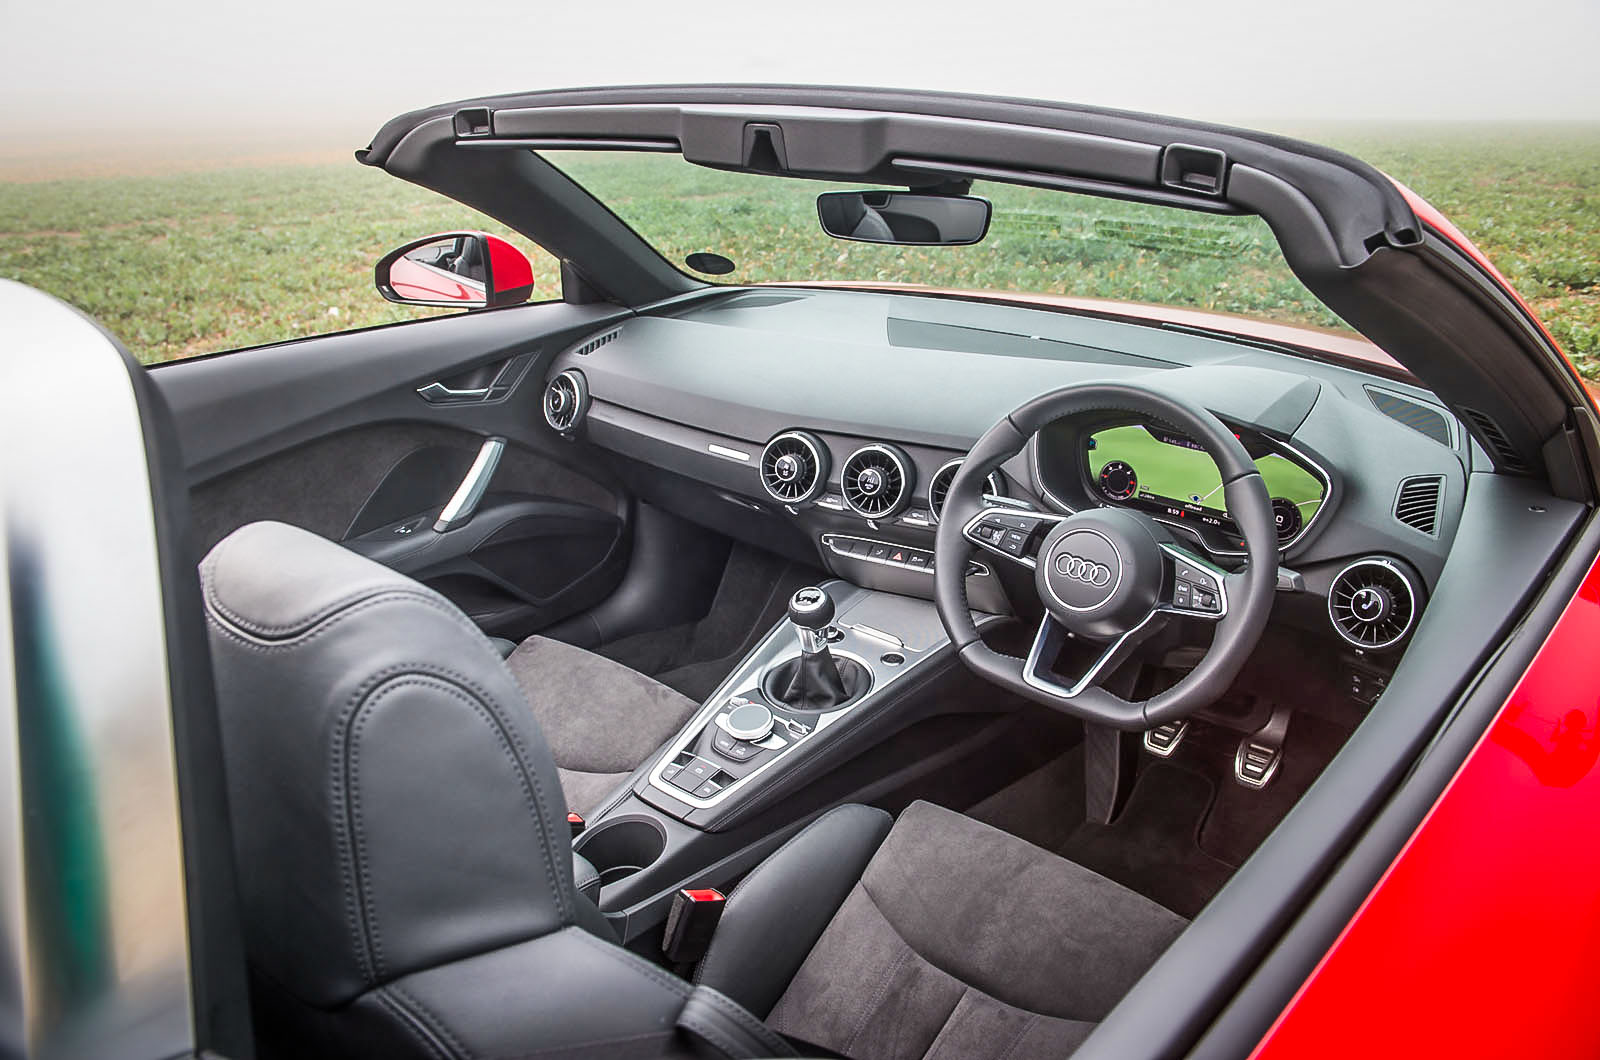 Audi TT Roadster's interior